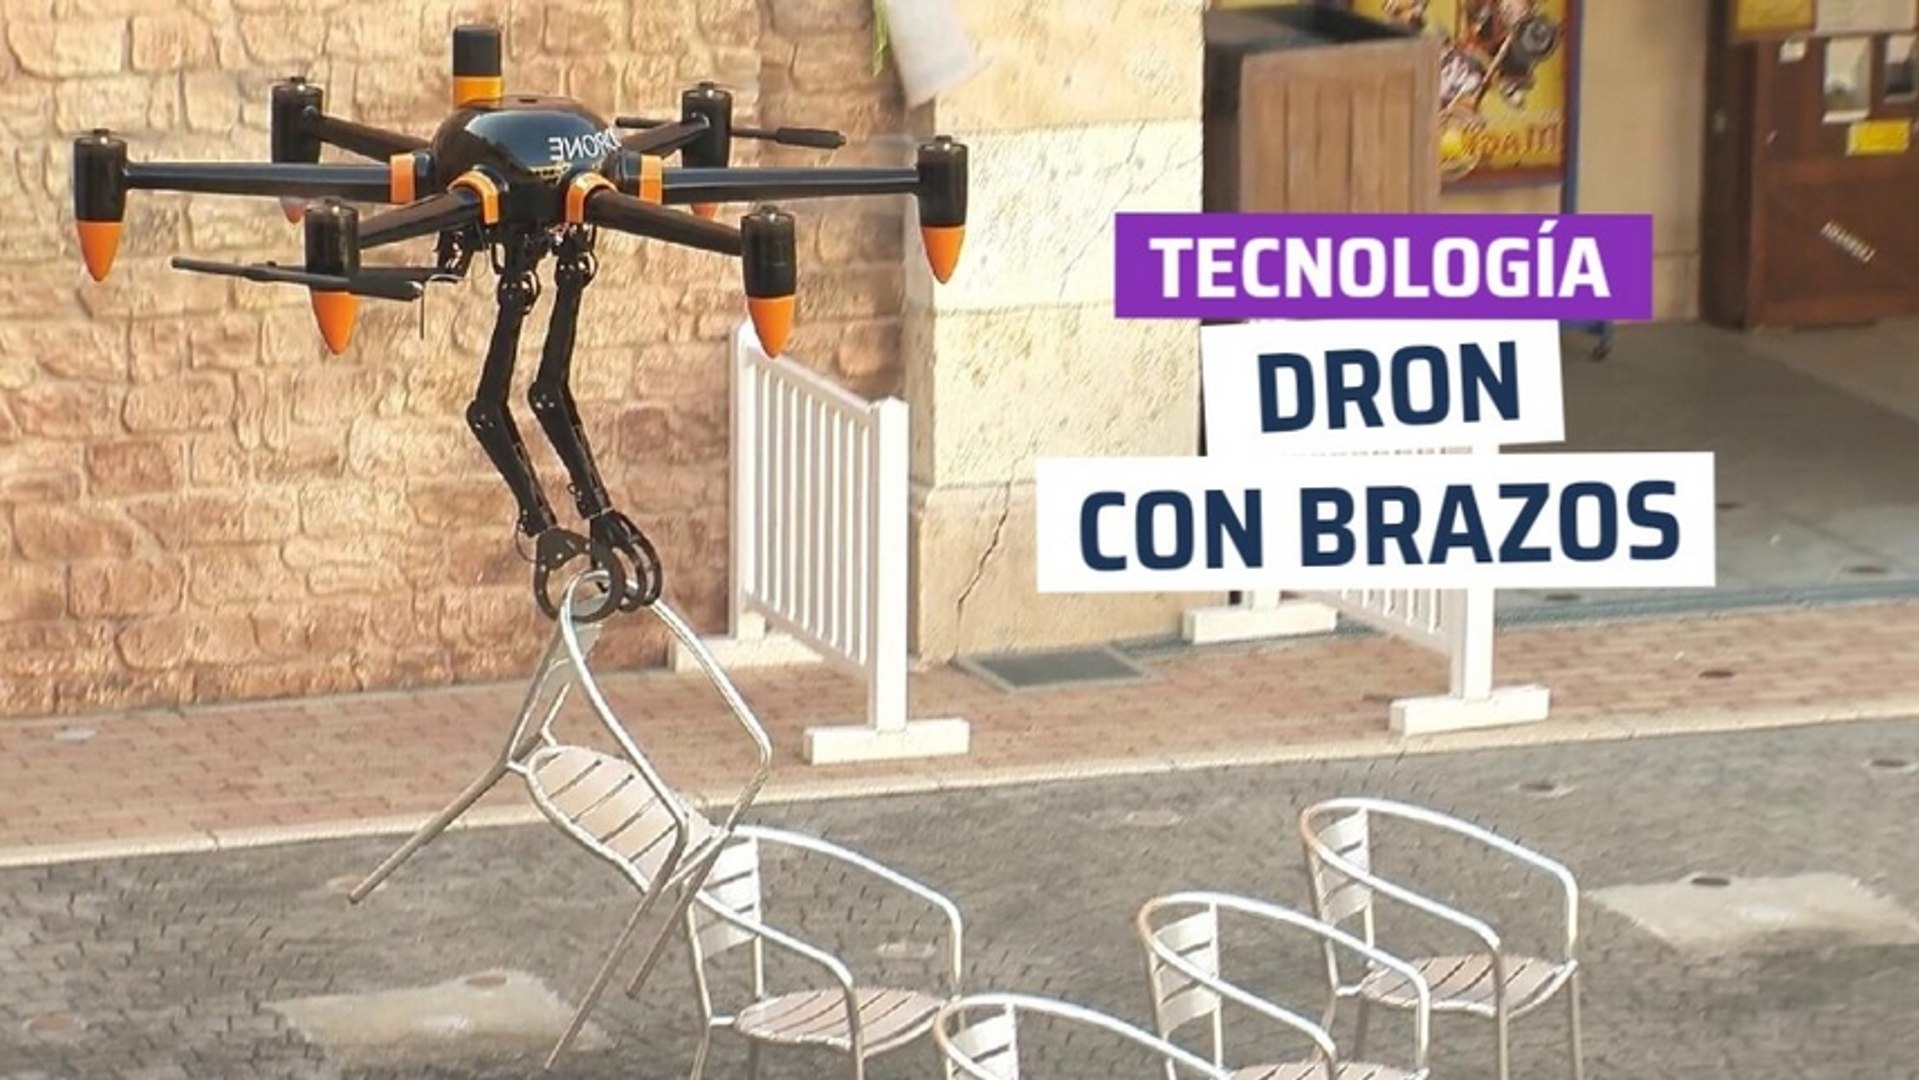 CH] Dron con brazos robóticos - Vídeo Dailymotion